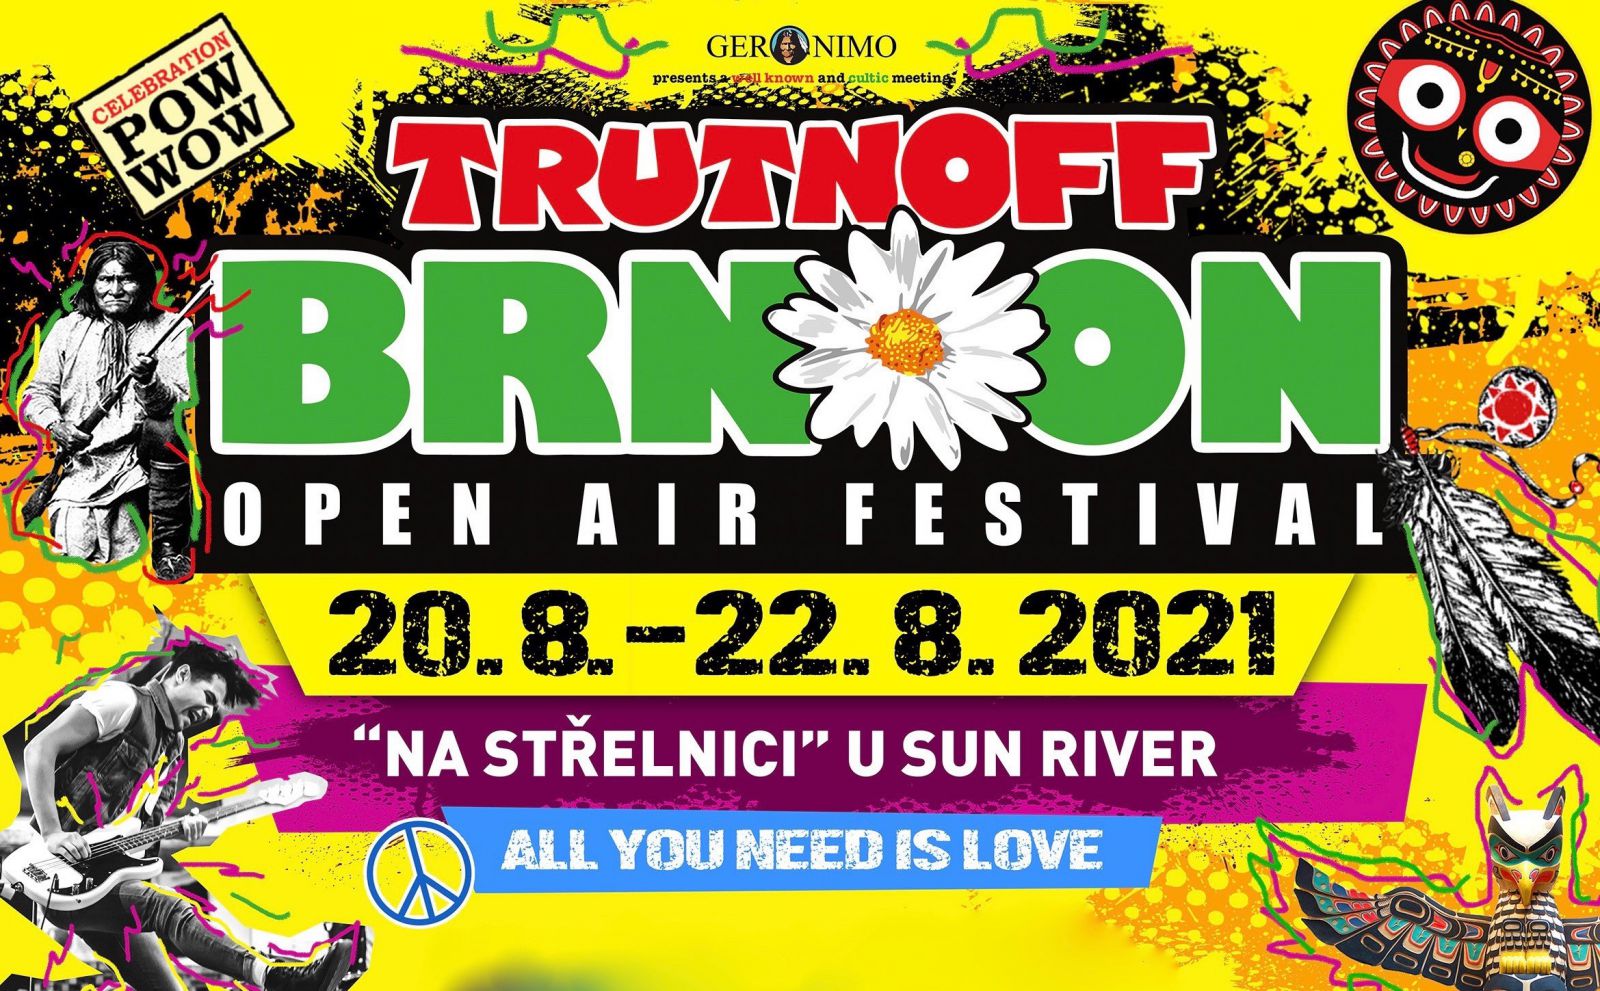 Festival Trutnoff